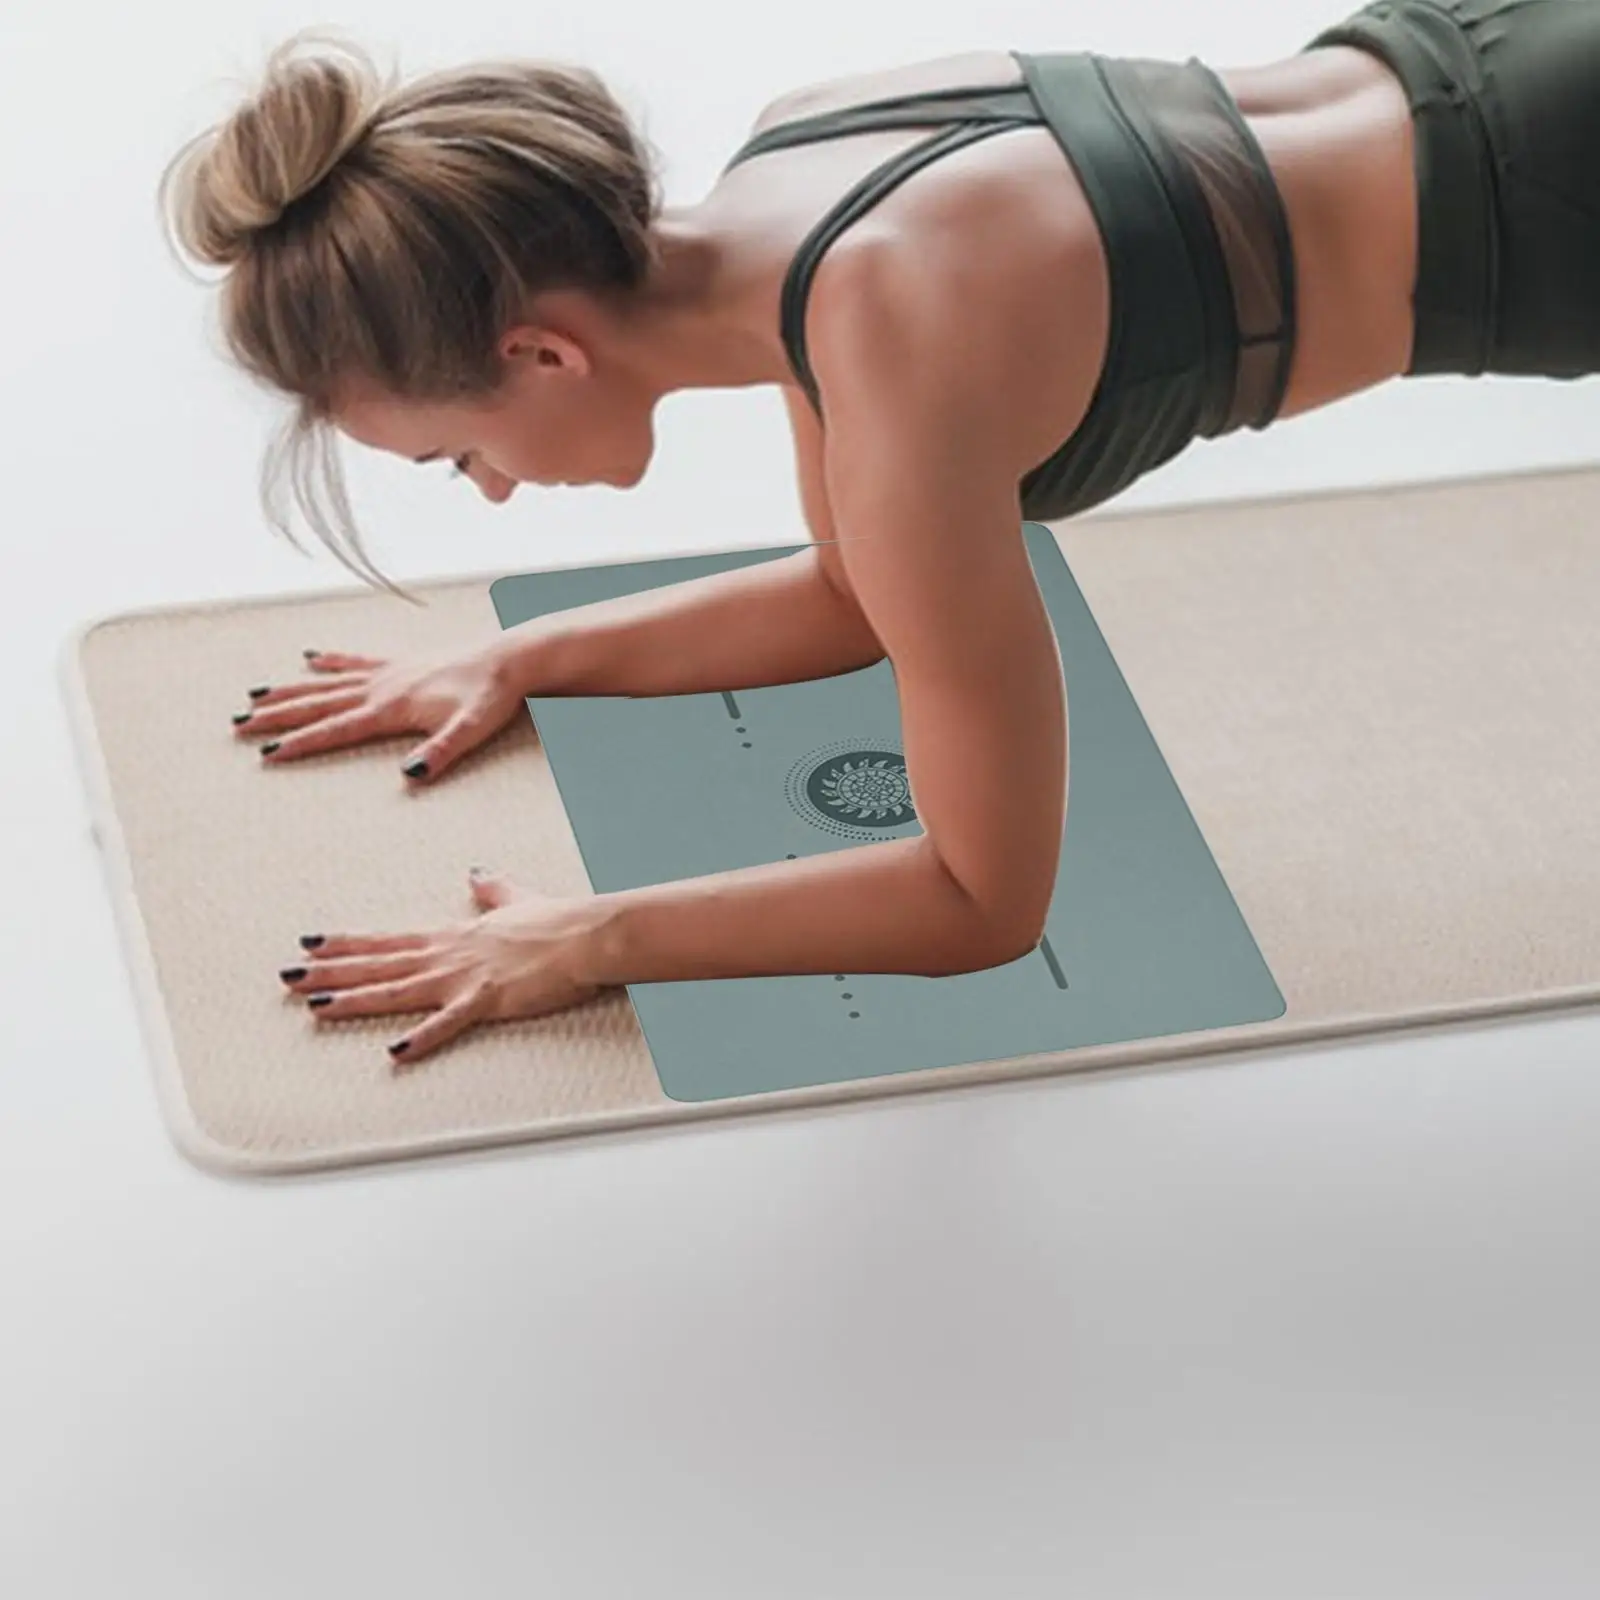 Yoga Mat Yoga Pad High Density Exercise Mat for Men Women Floor Protection for Strength Training Fitness Muscle Building